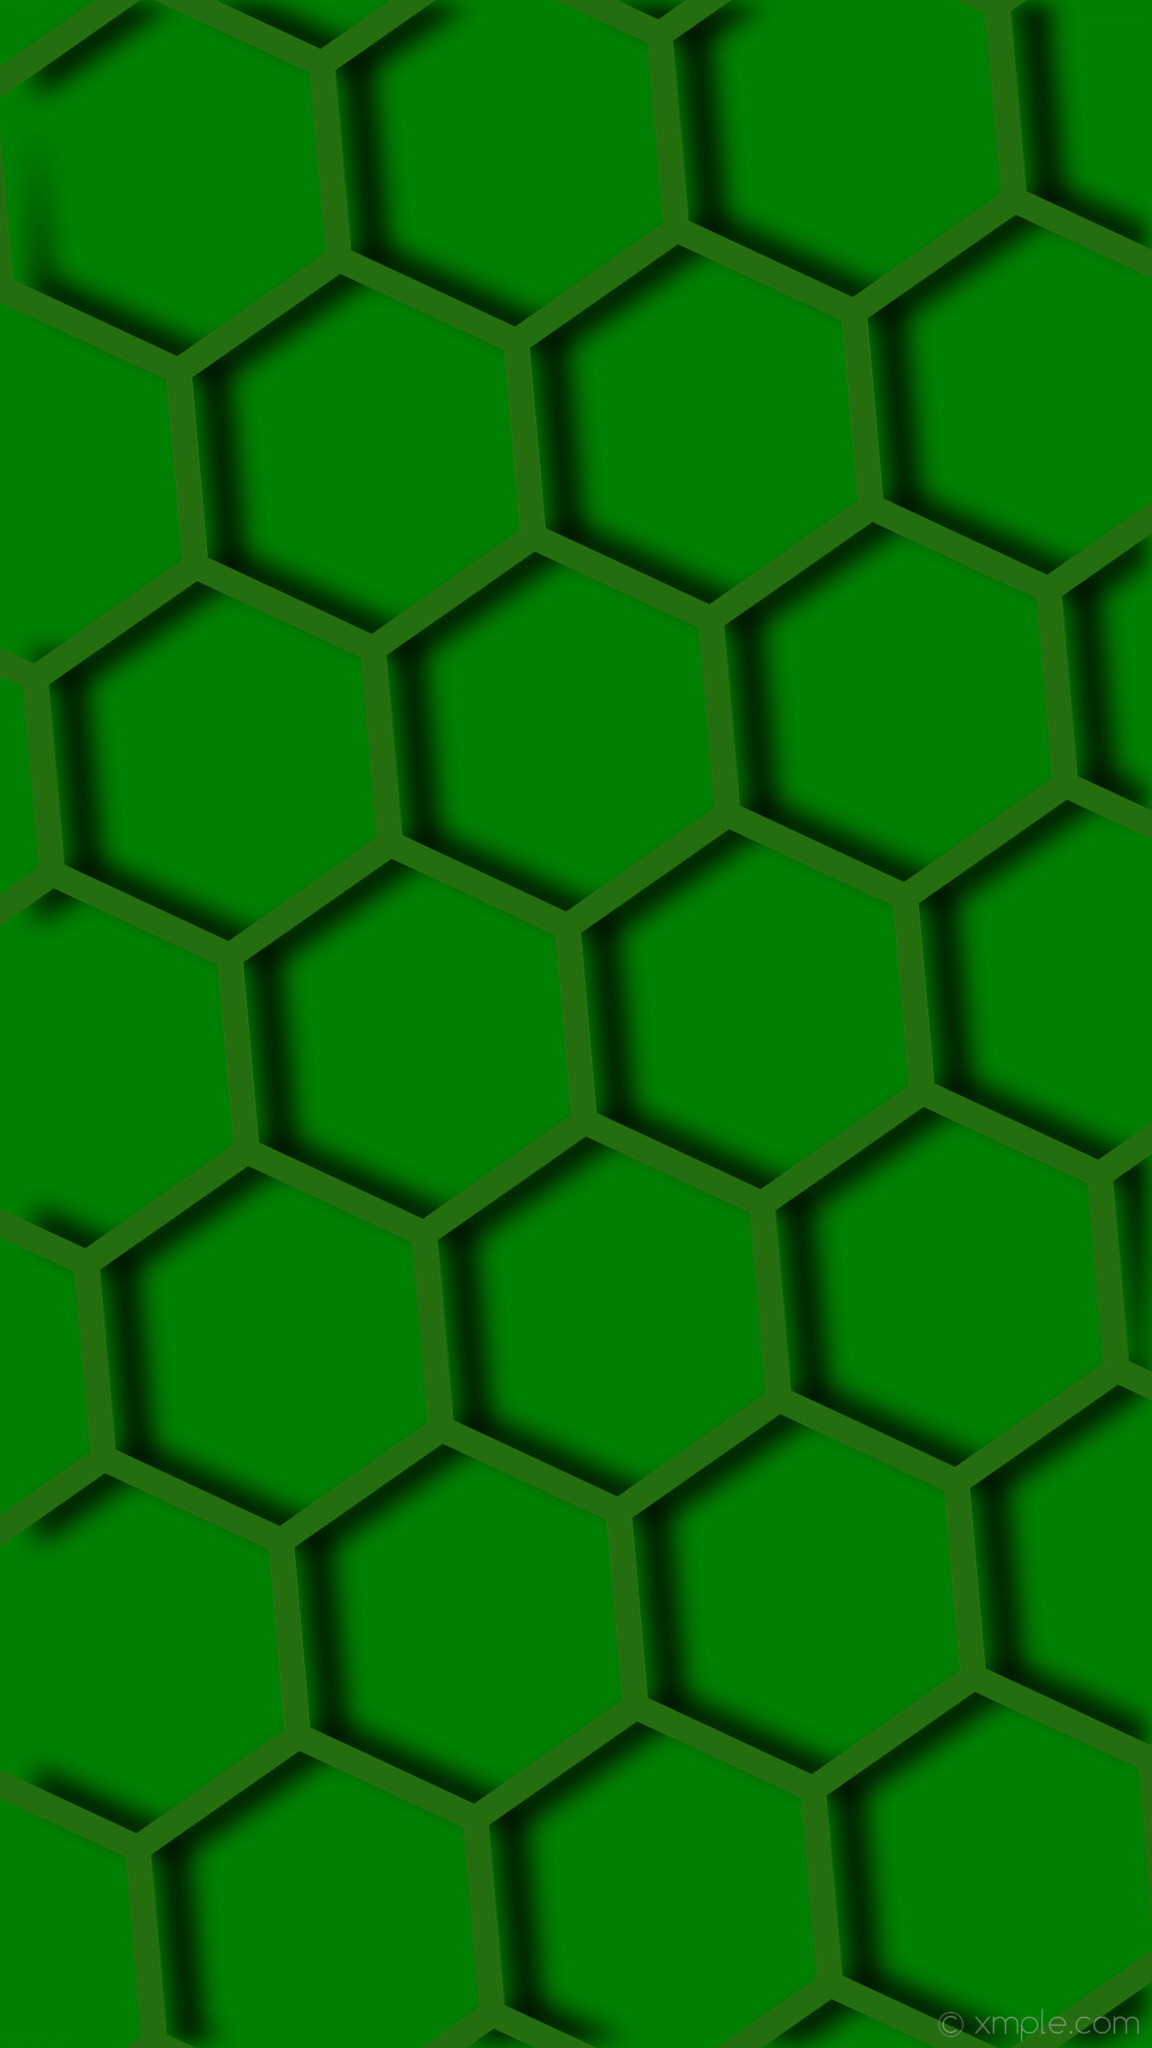 1152x2048 wallpaper beehive hexagon green drop shadow #256e10 #008000 0Â° 26px 339px